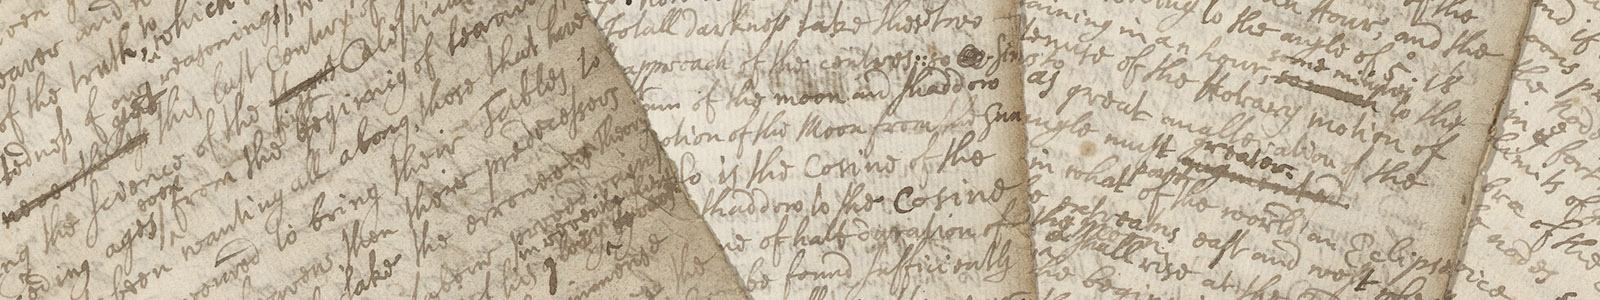 The Alphabet of Genius: Important Autograph Letters and Manuscripts